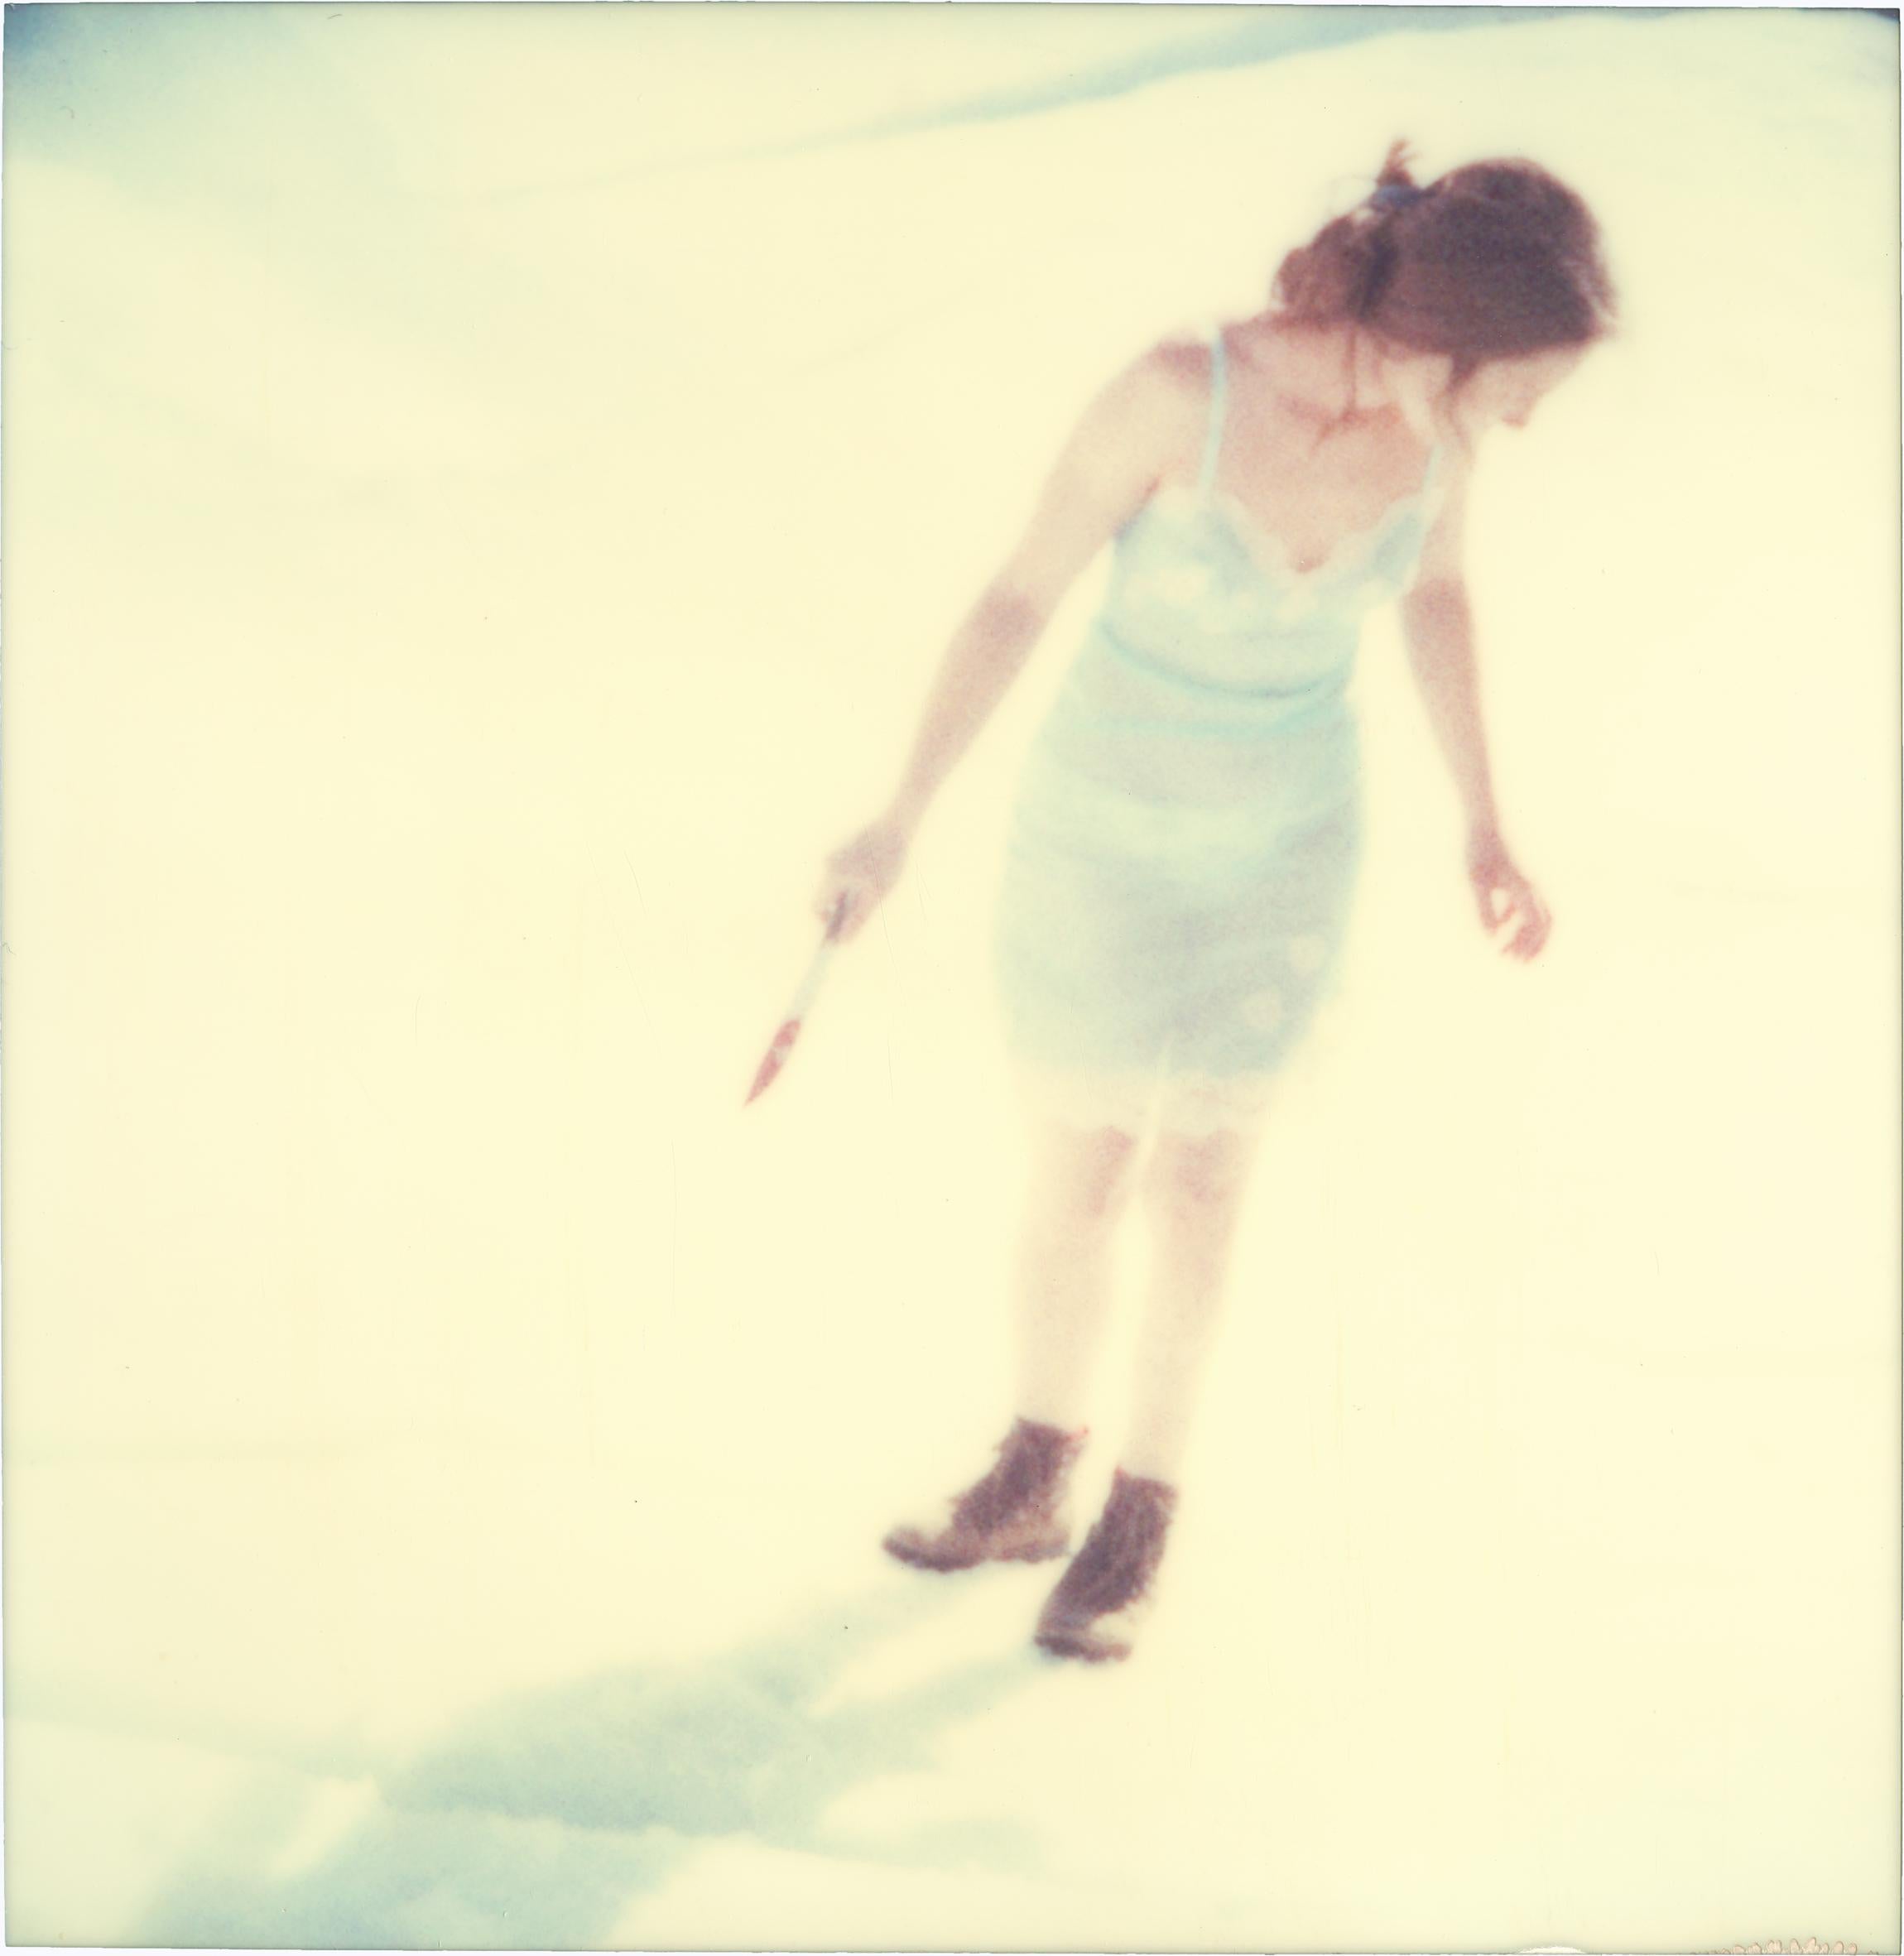 Stefanie Schneider Landscape Photograph - Frozen XIII (Stranger than Paradise) 